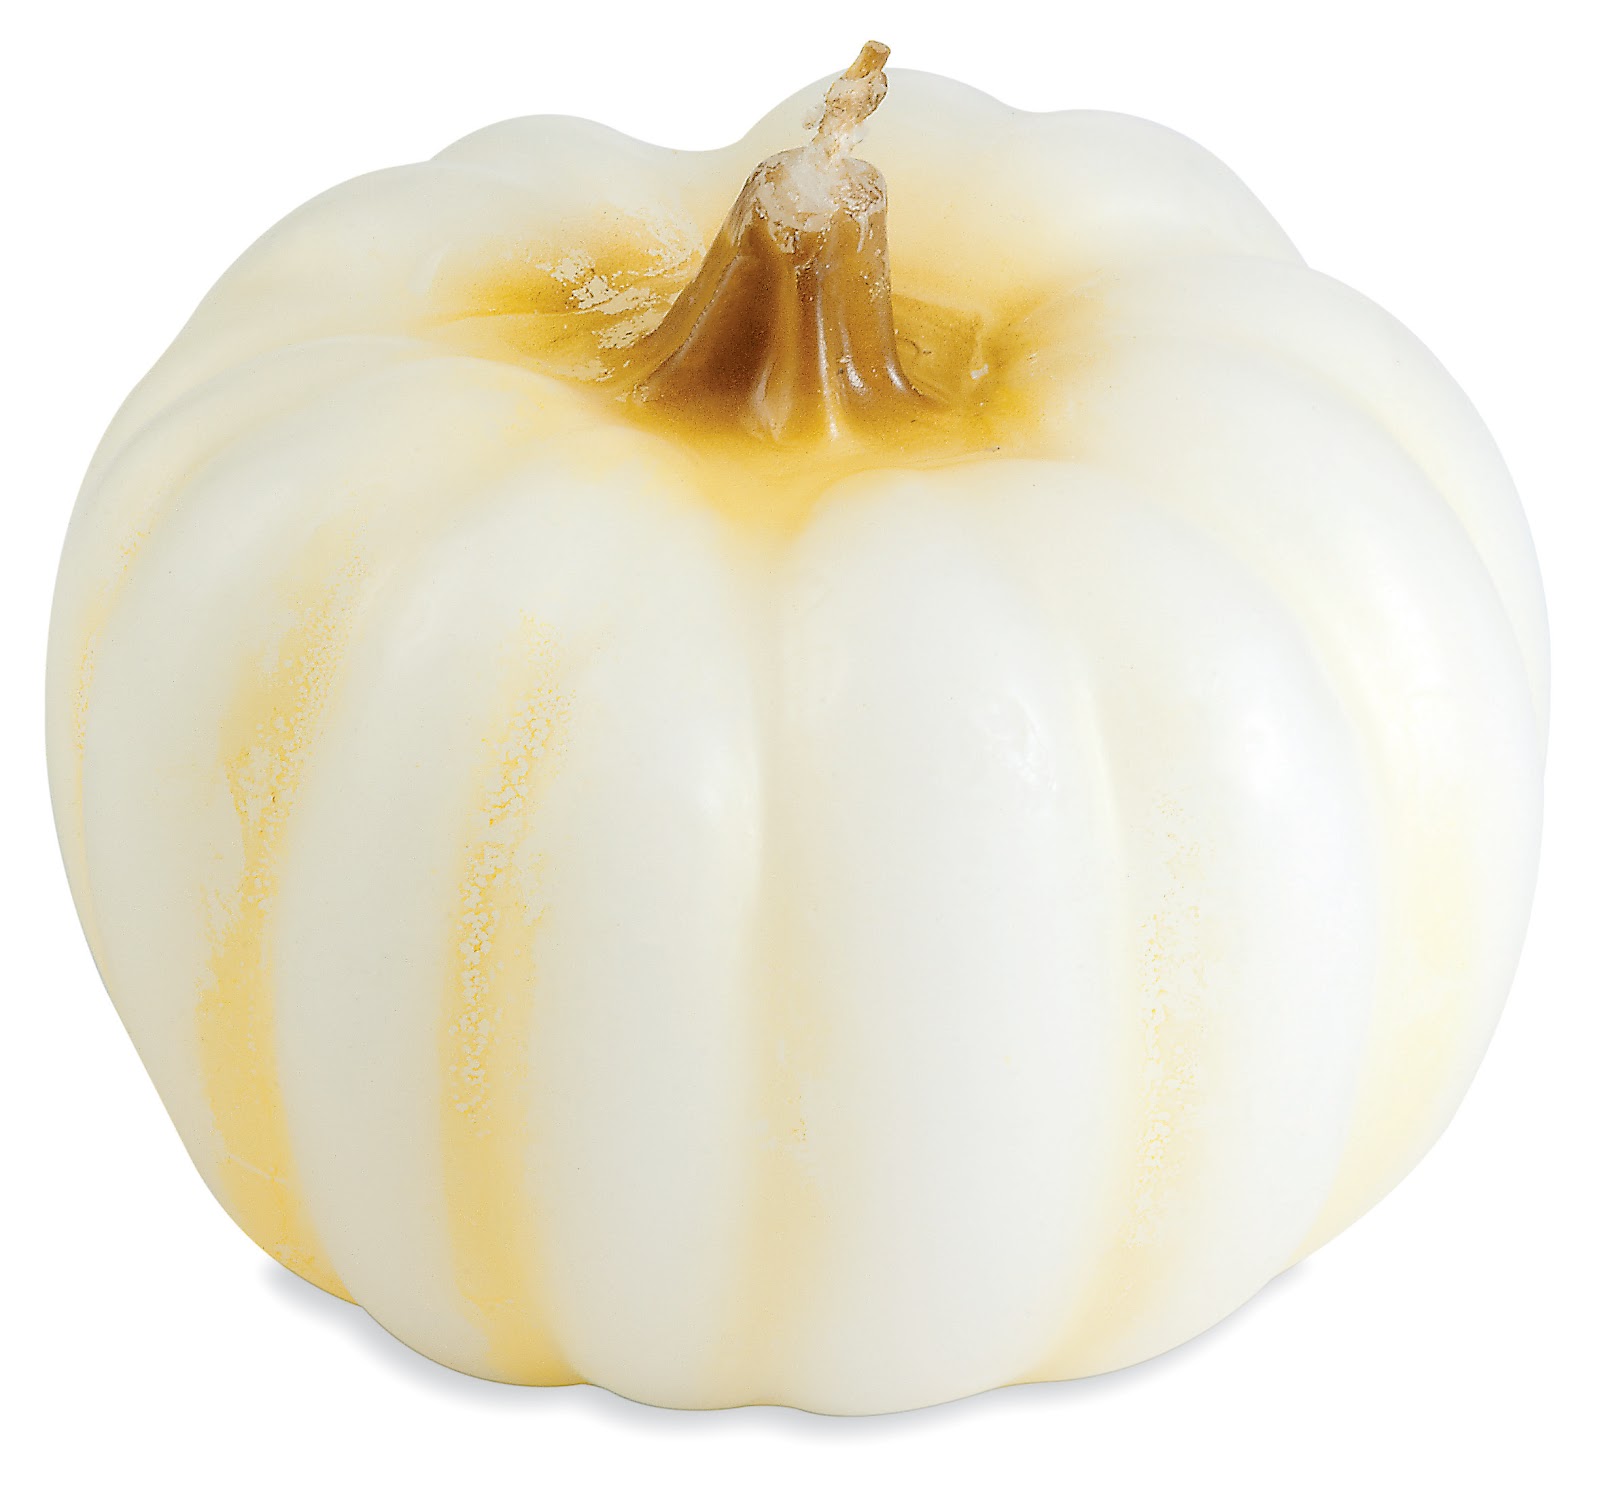 white pumpkin